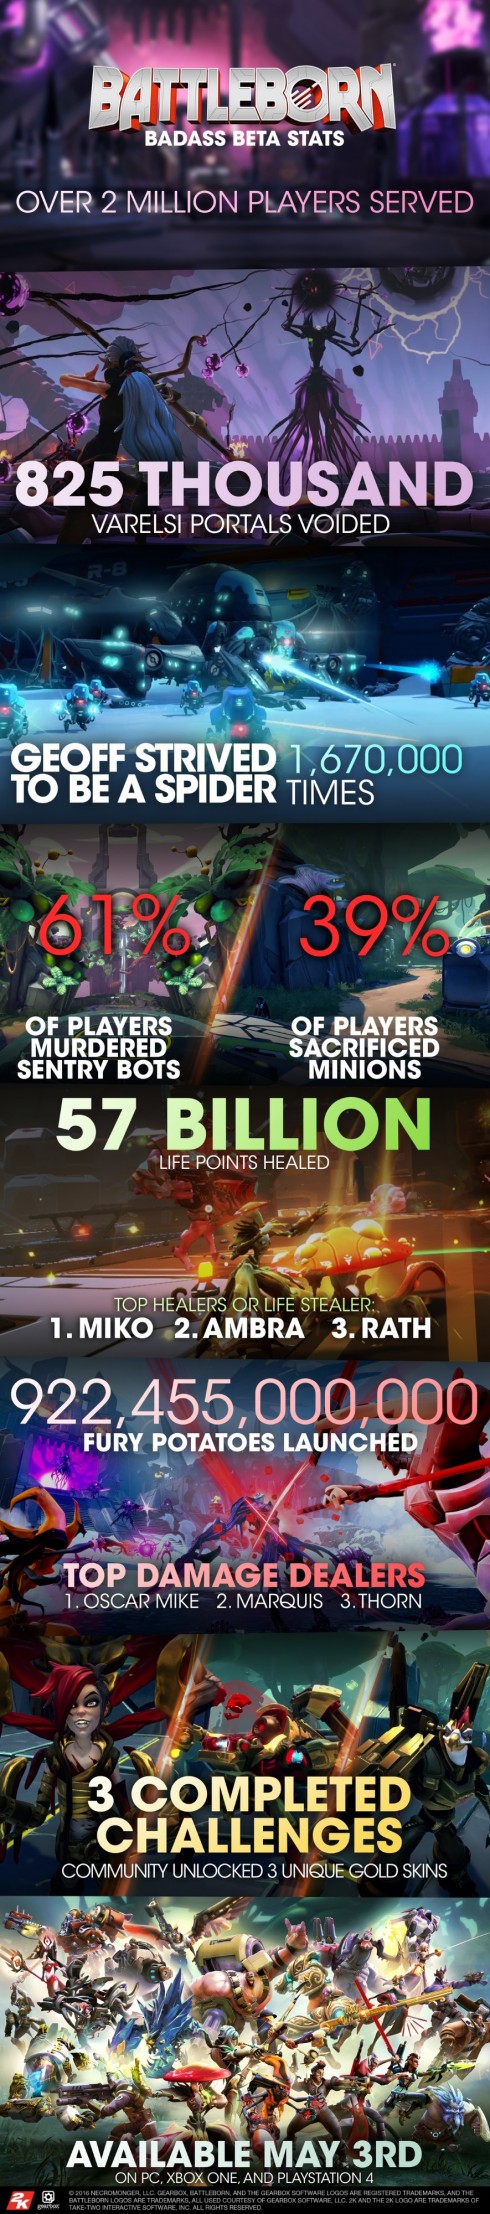 battleborn beta_infographic